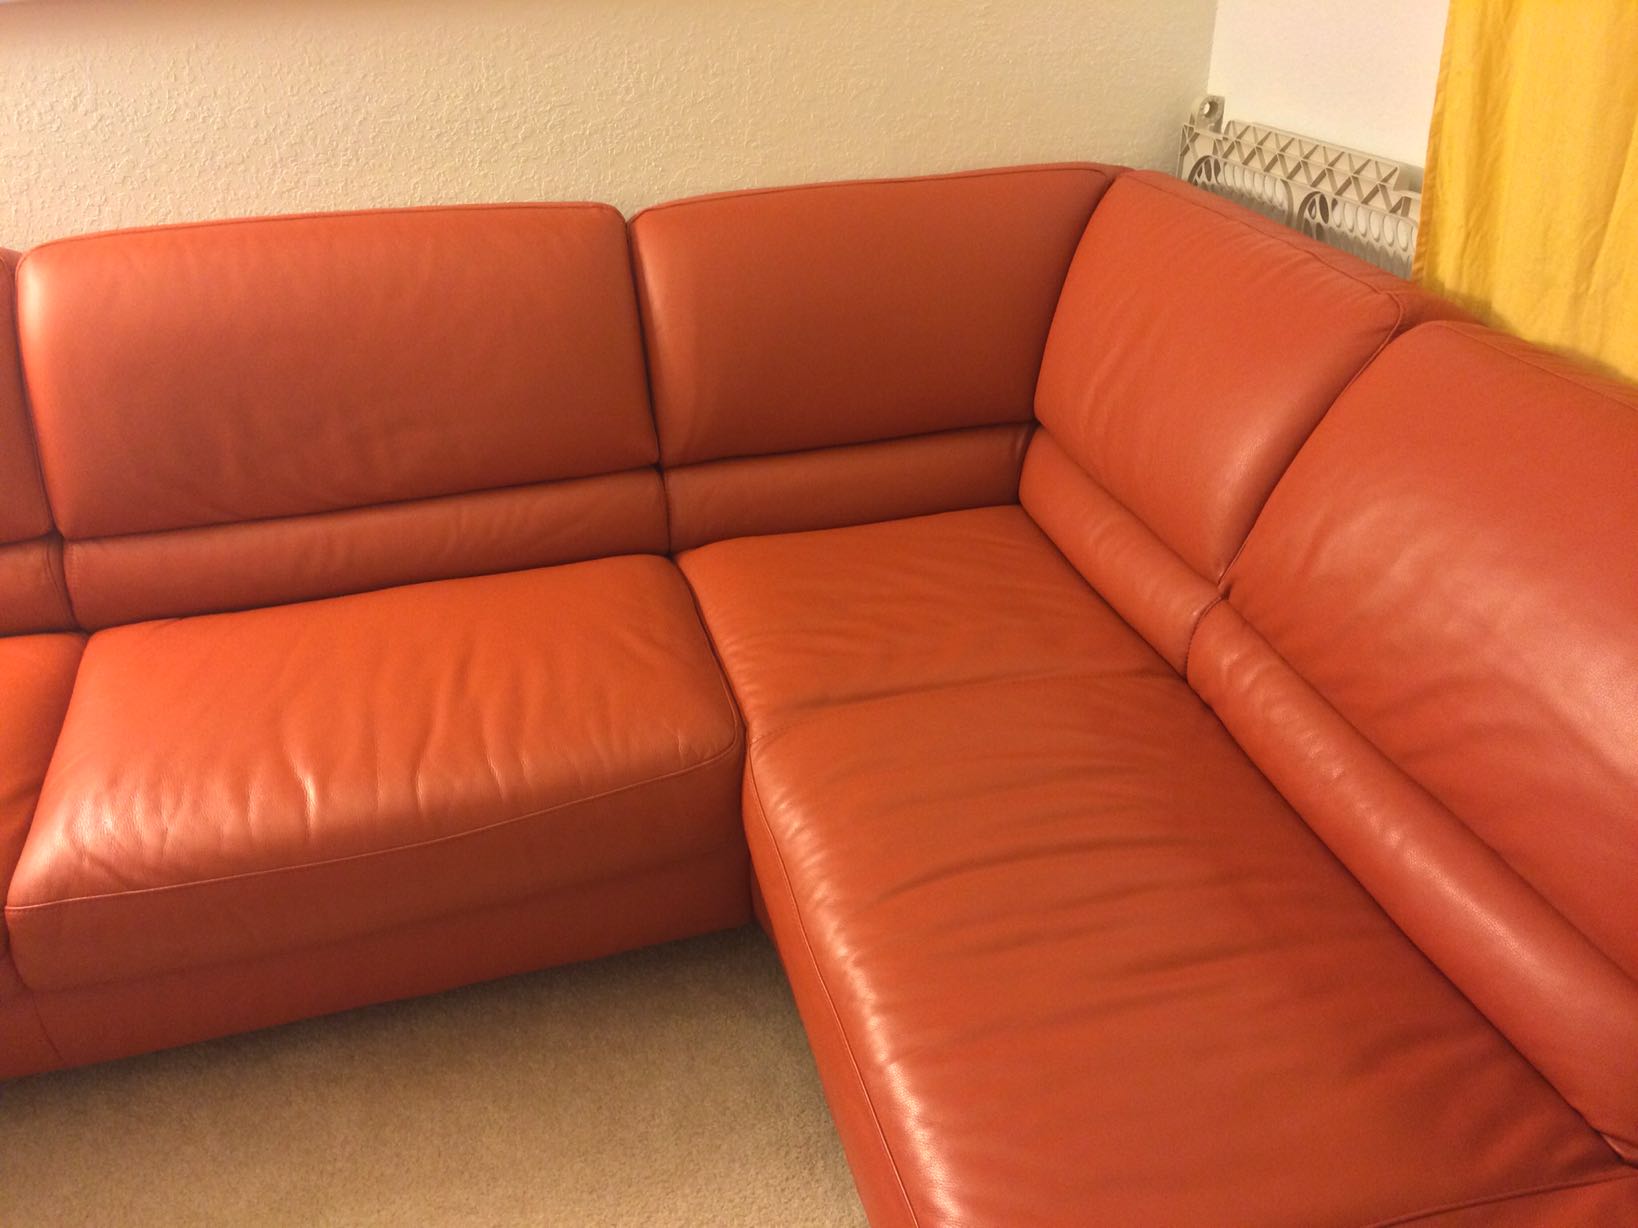 Italsofa leather sectional sofa "terracota" Beautiful